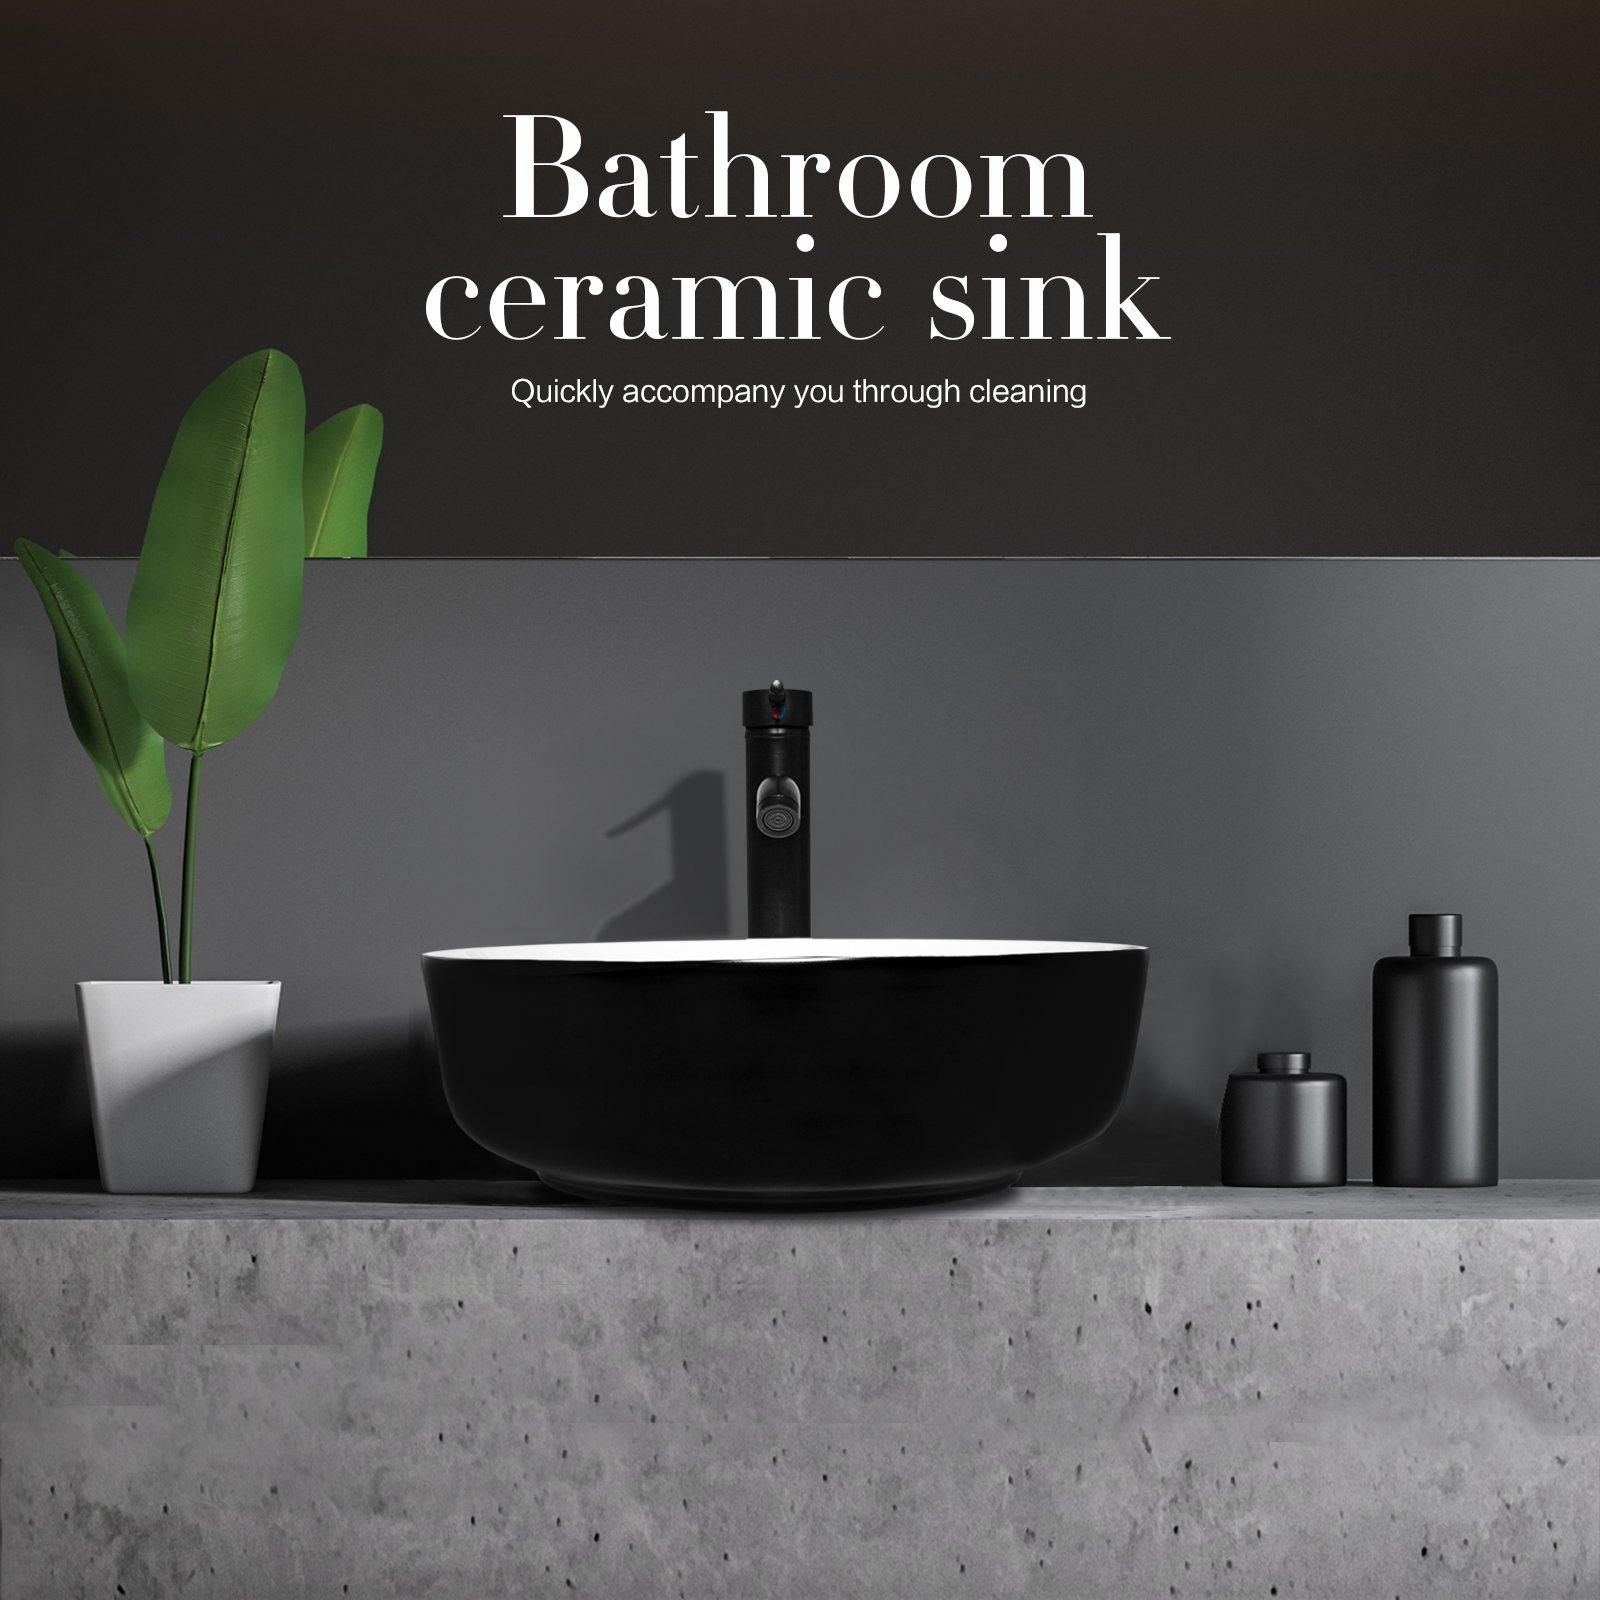 Elecwish Vessel Sinks Ceramic Bathroom Sink with Faucet Drain Combo display scene